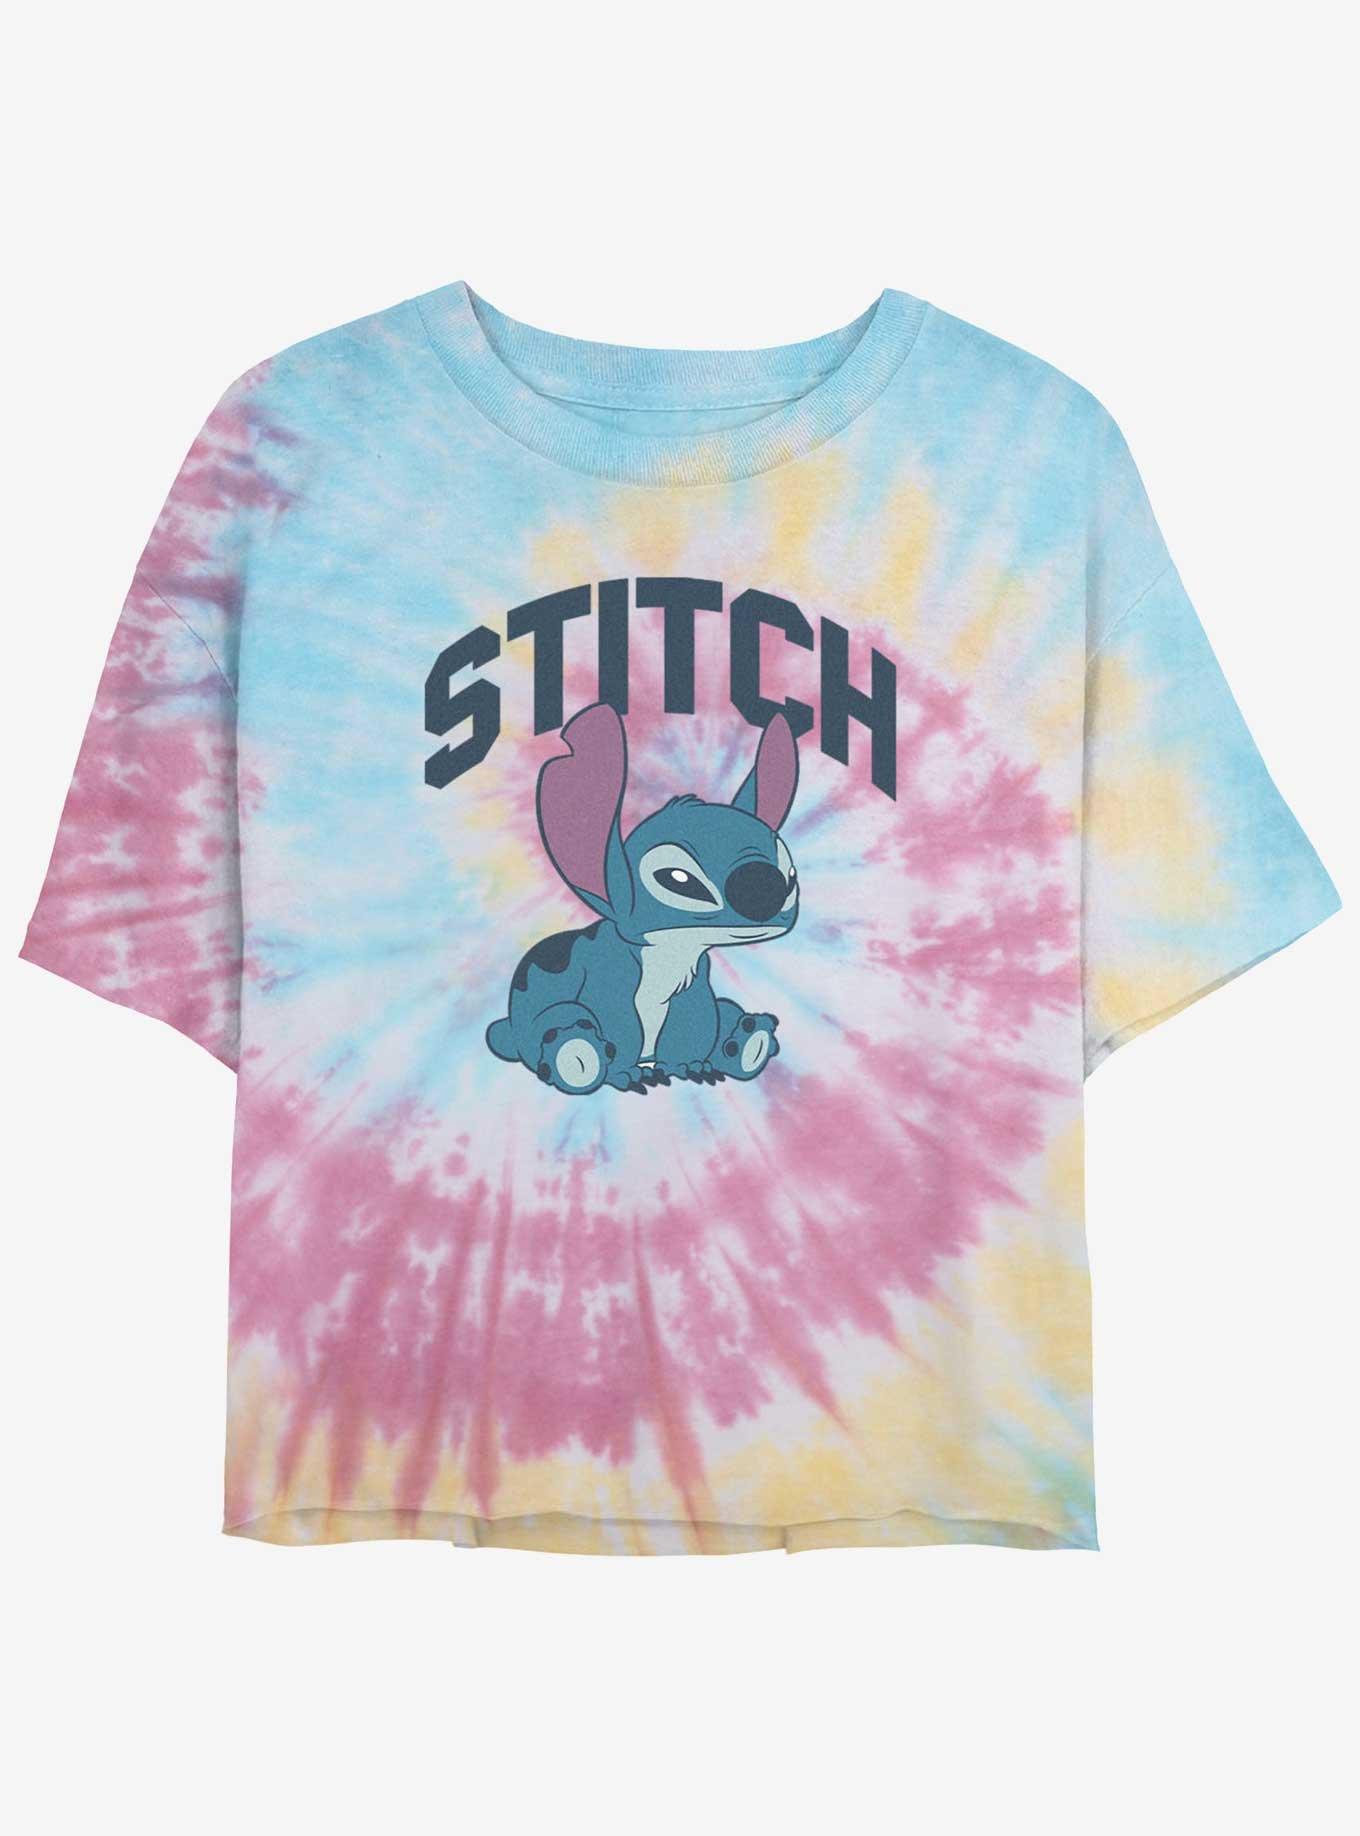 Disney Lilo & Stitch Hangry Tie-Dye Girls Crop T-Shirt